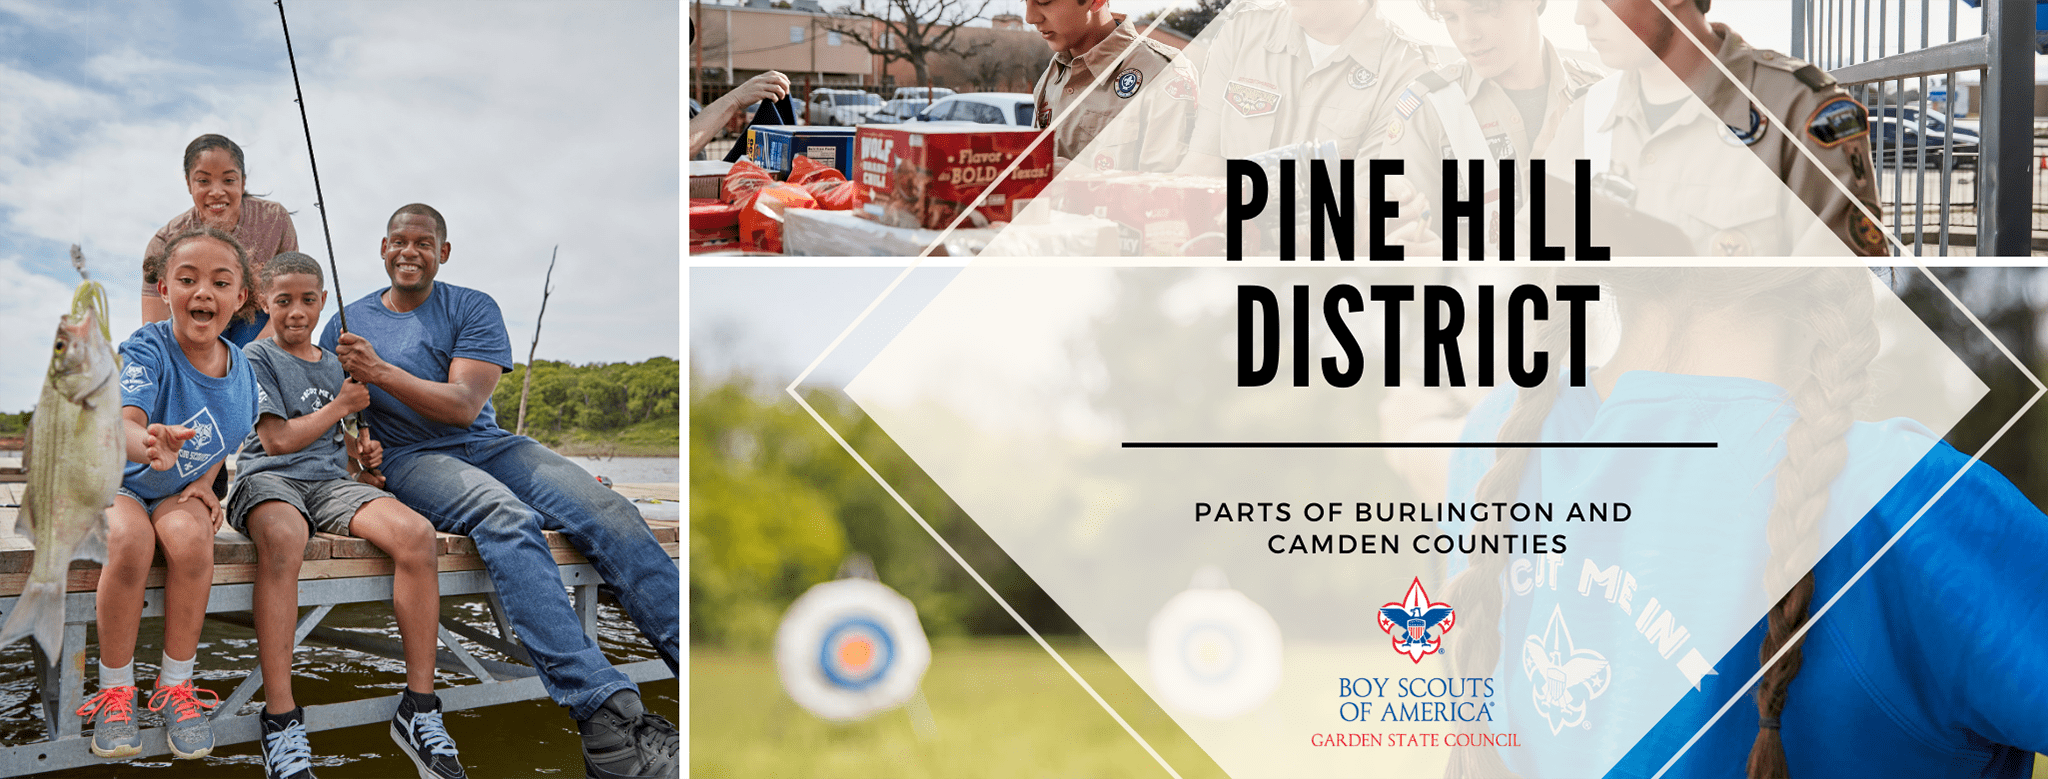 Pine Hill District, Garden State Council, N.J.